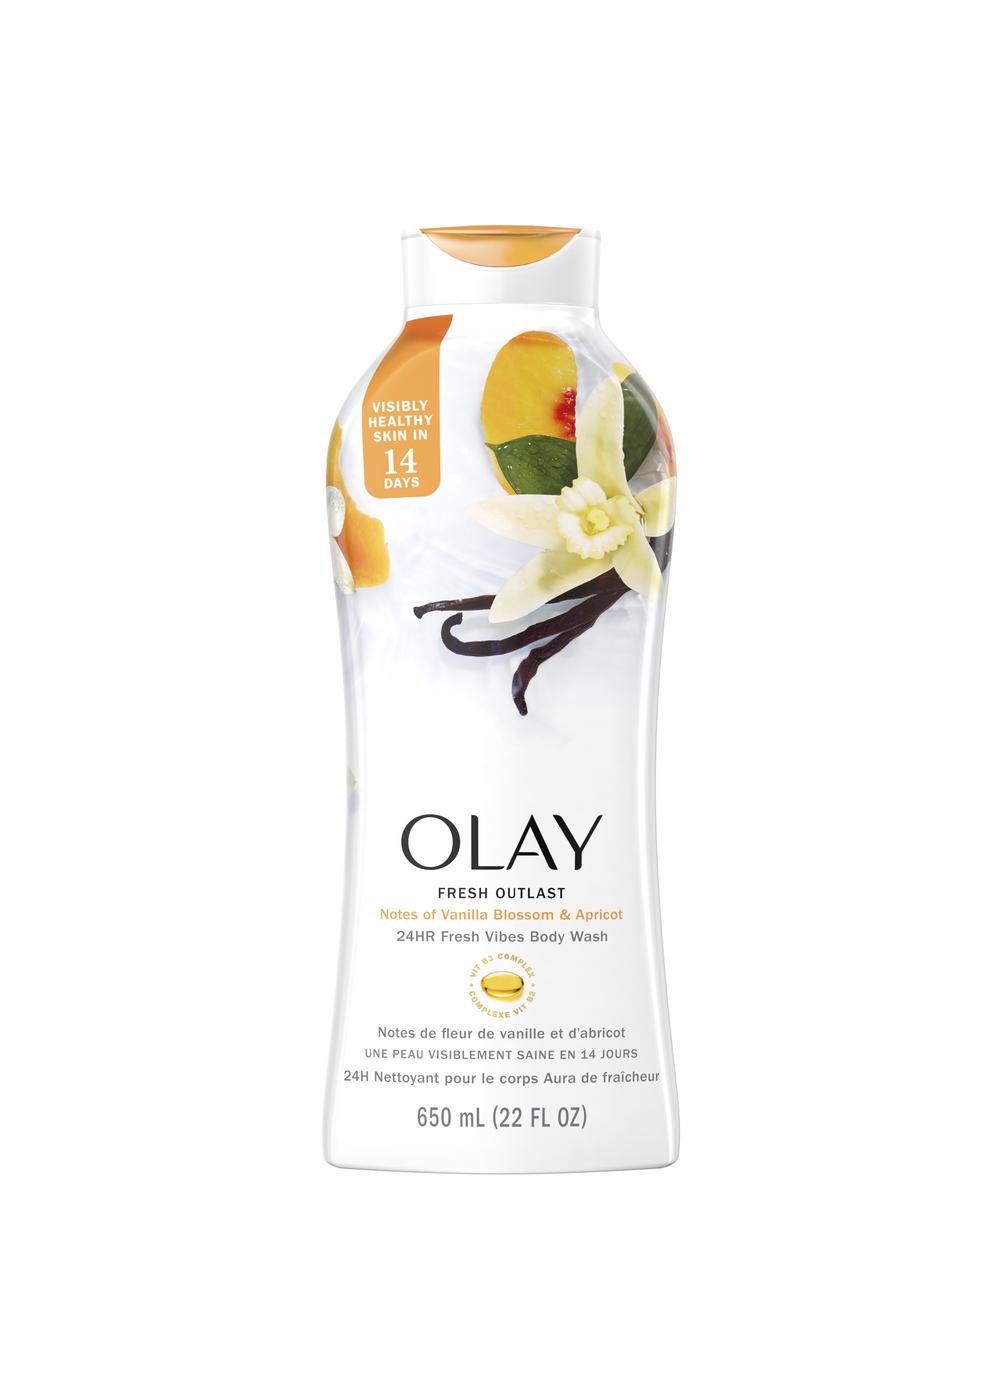 Olay Fresh Outlast Body Wash - Vanilla Blossom & Apricot; image 1 of 2